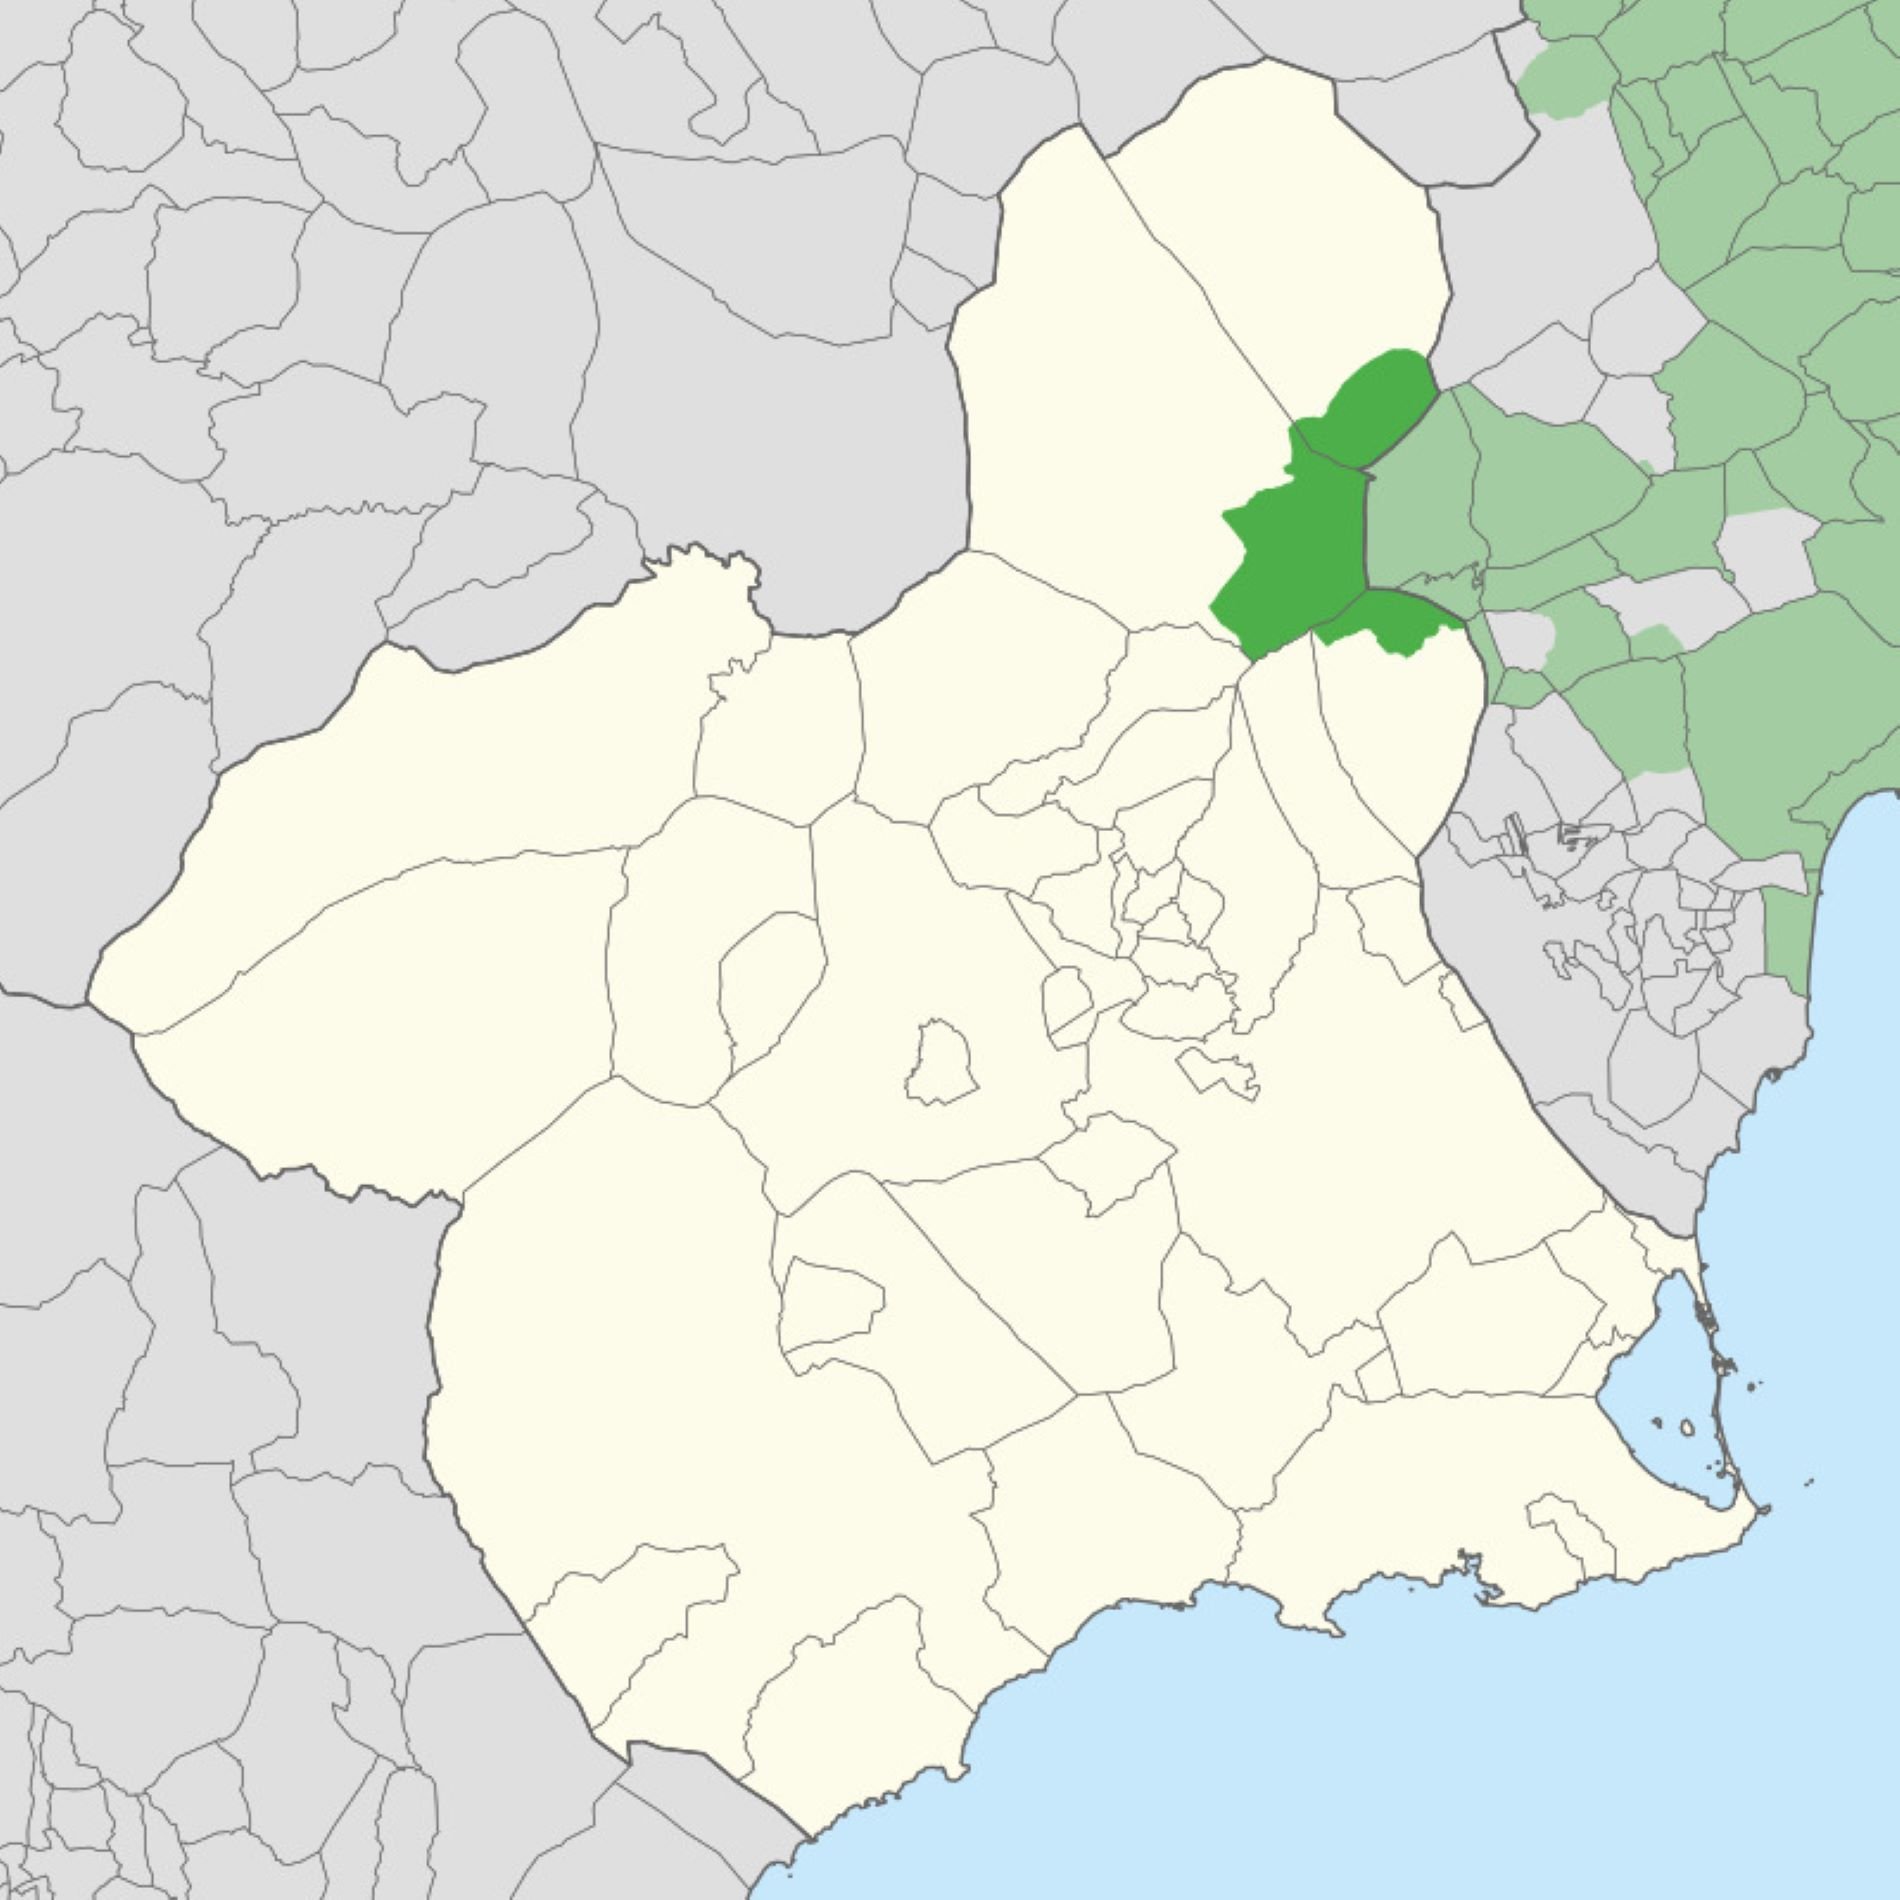 Carxe Murcia / Wikimedia Commons